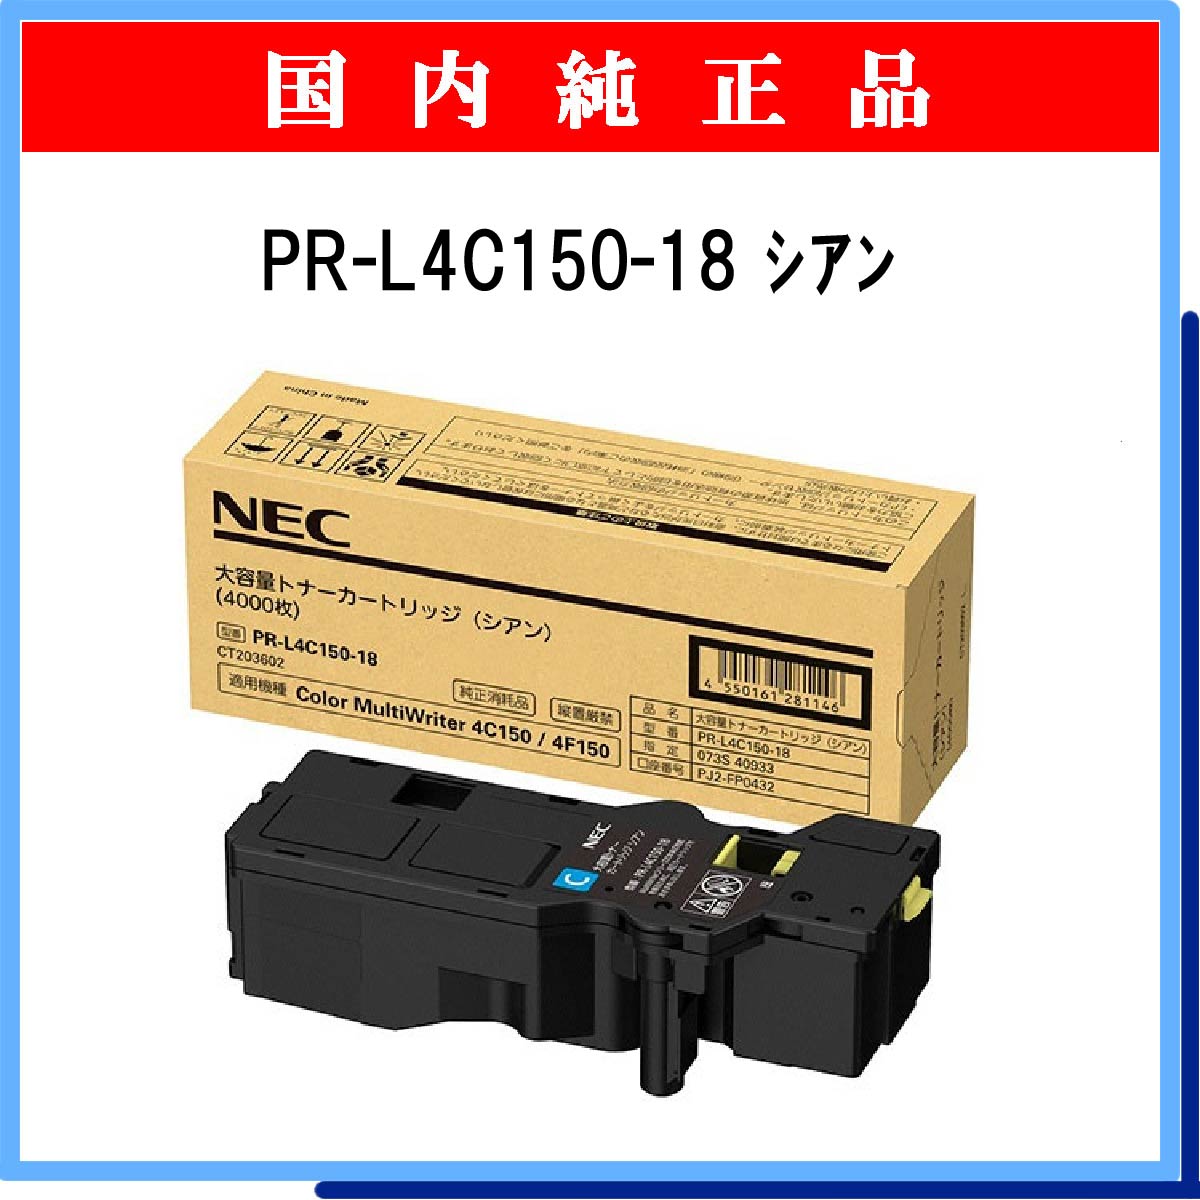 Color MultiWriter PR-L4C150-17 大容量トナーカートリッジ(マゼンタ) - 1